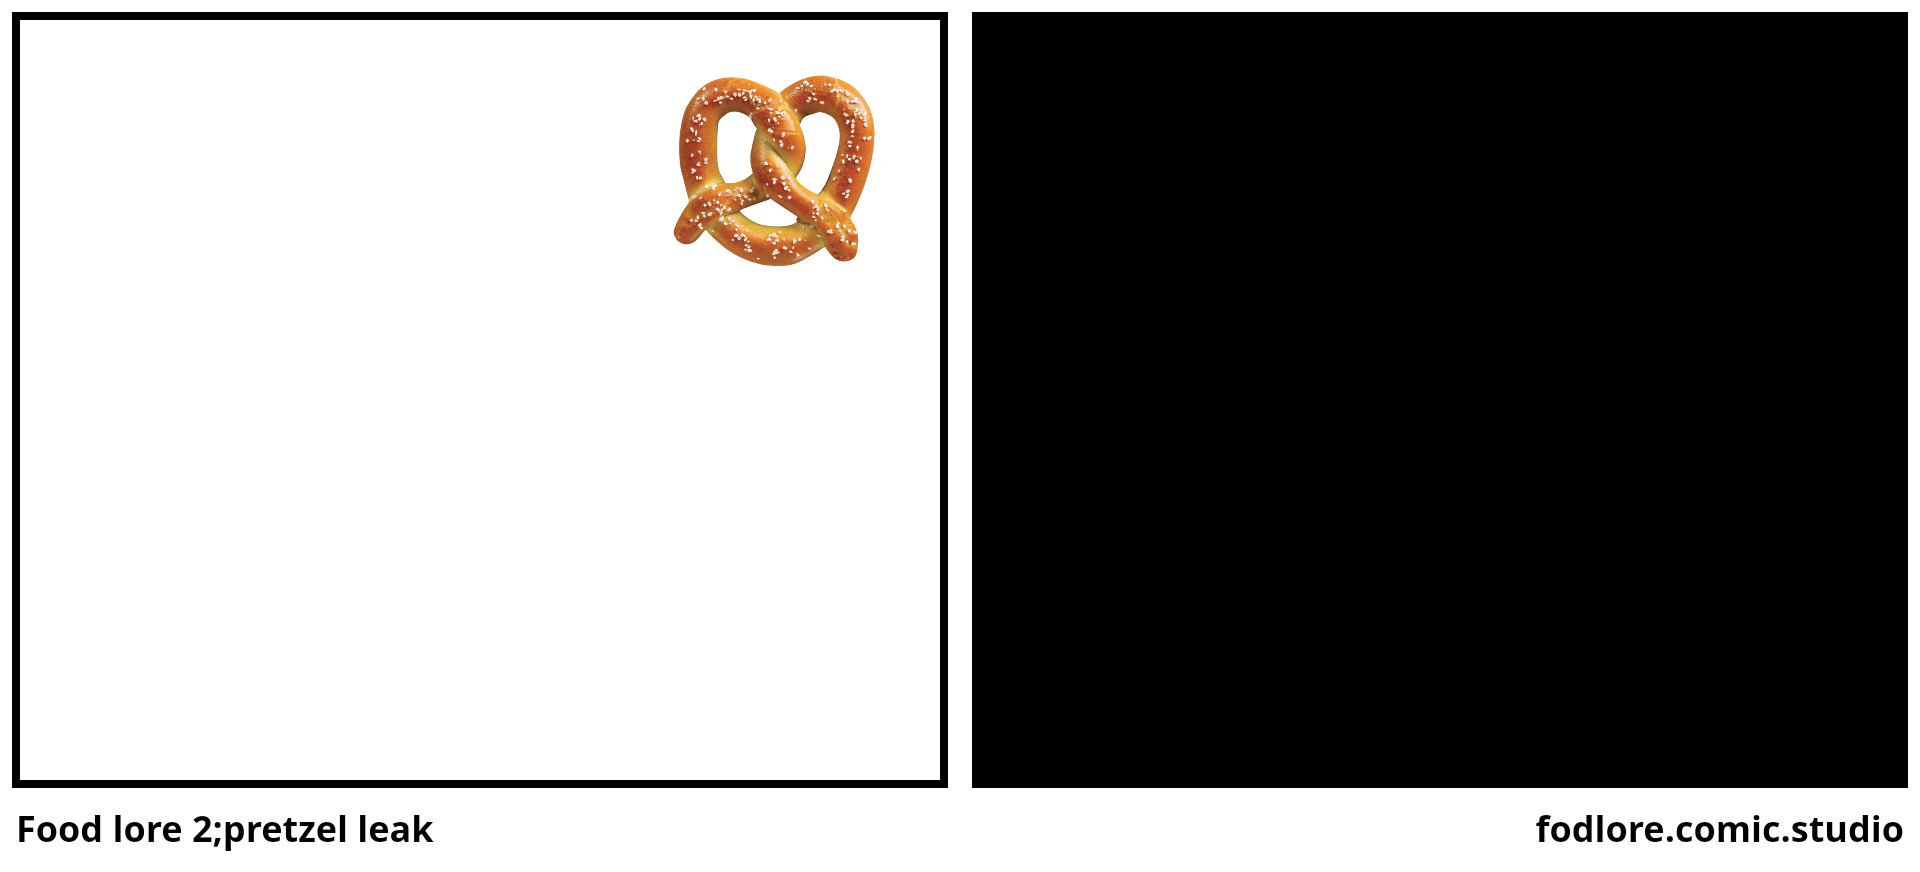 Food lore 2;pretzel leak